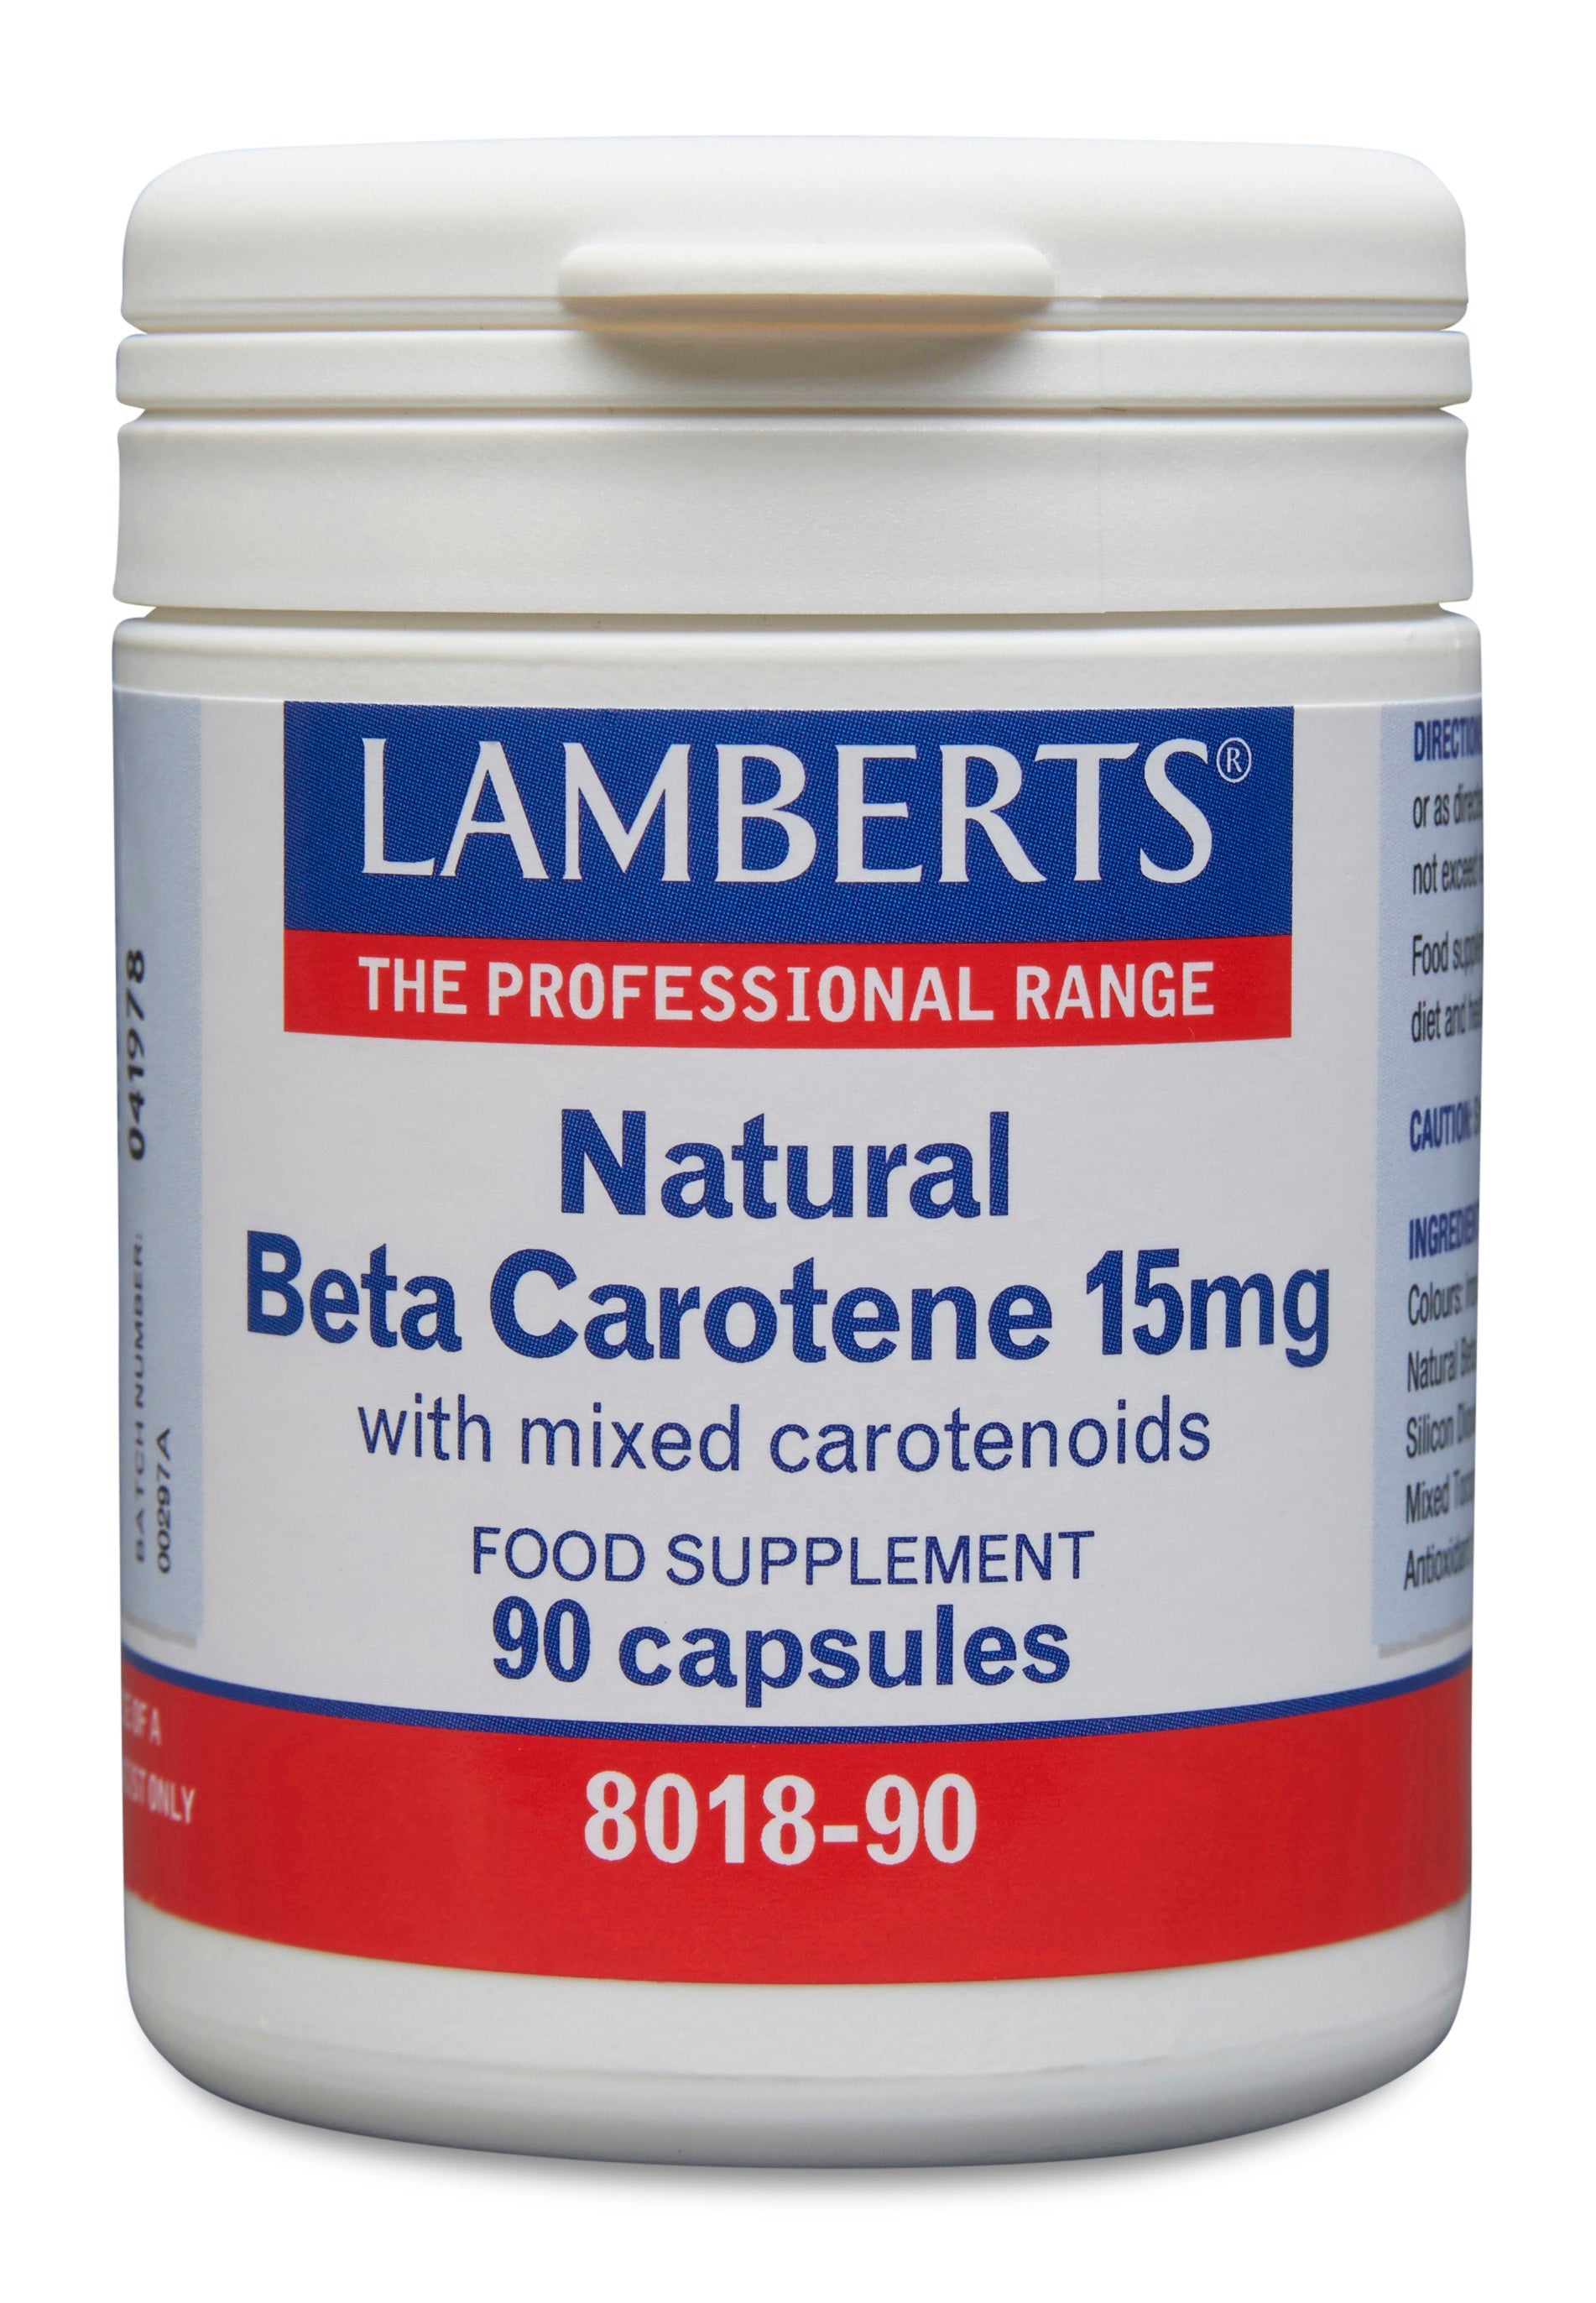 lamberts - 90 Capsules Natural Beta Carotene 15mg